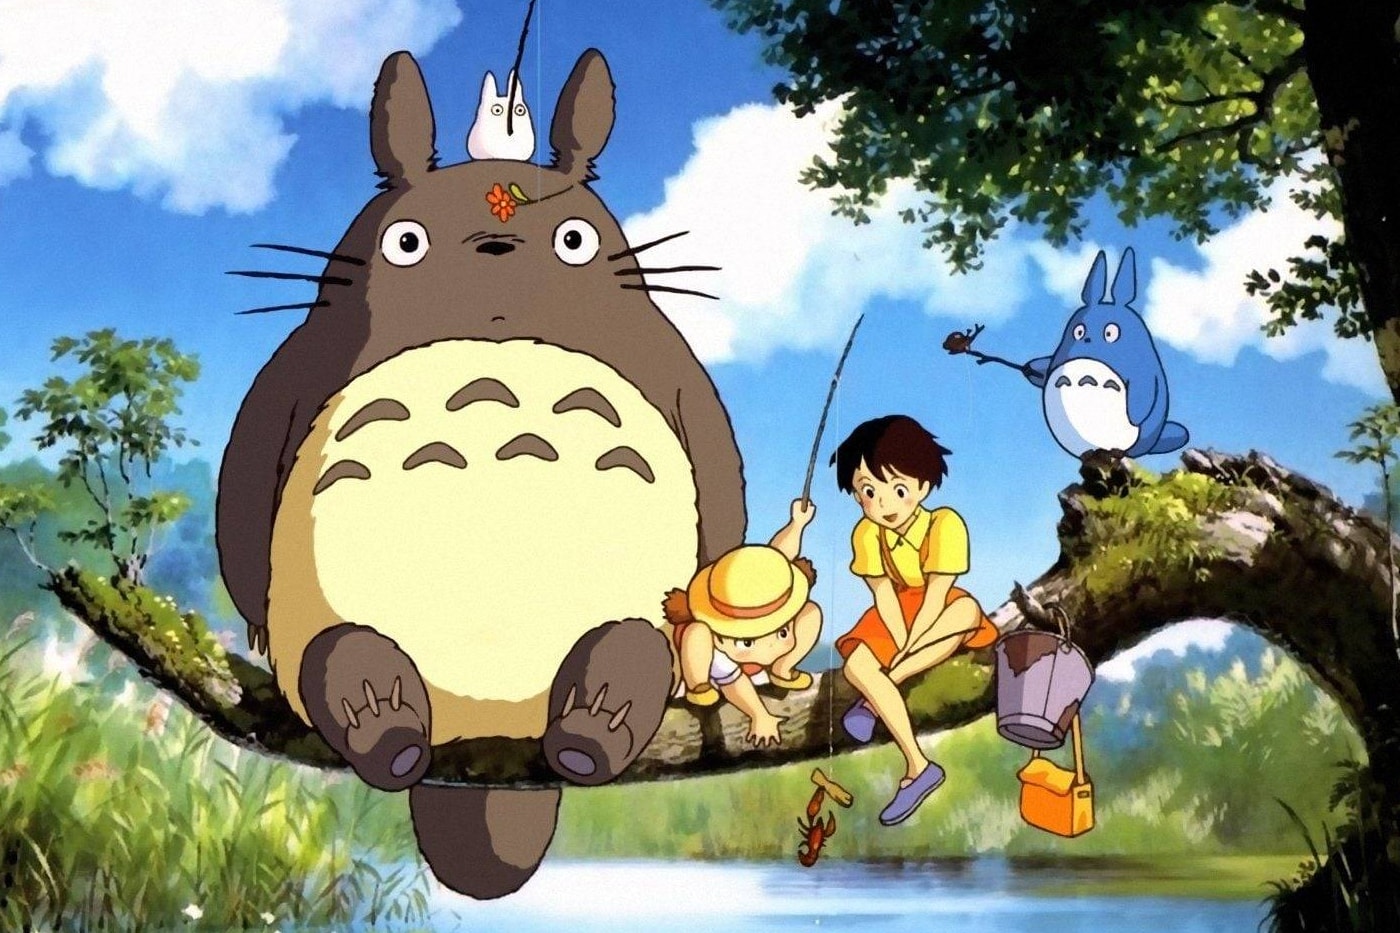 Studio Ghibli Honorary Palme d’Or Cannes film festival